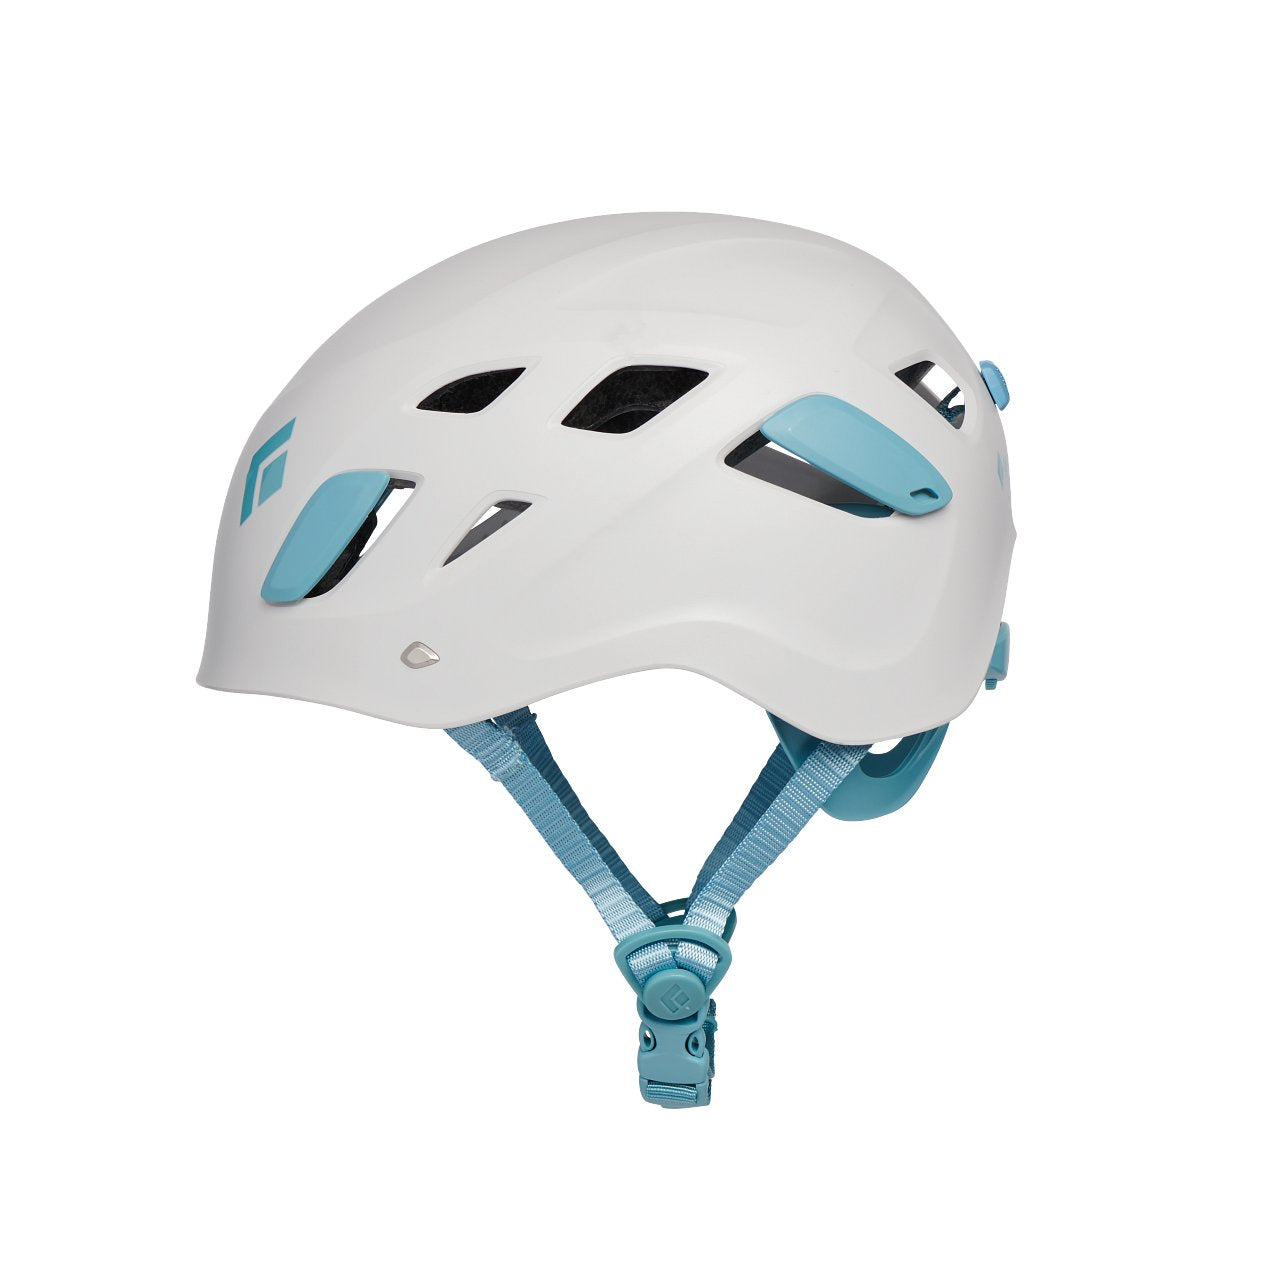 Half Dome - alloy, women's climbing helmet